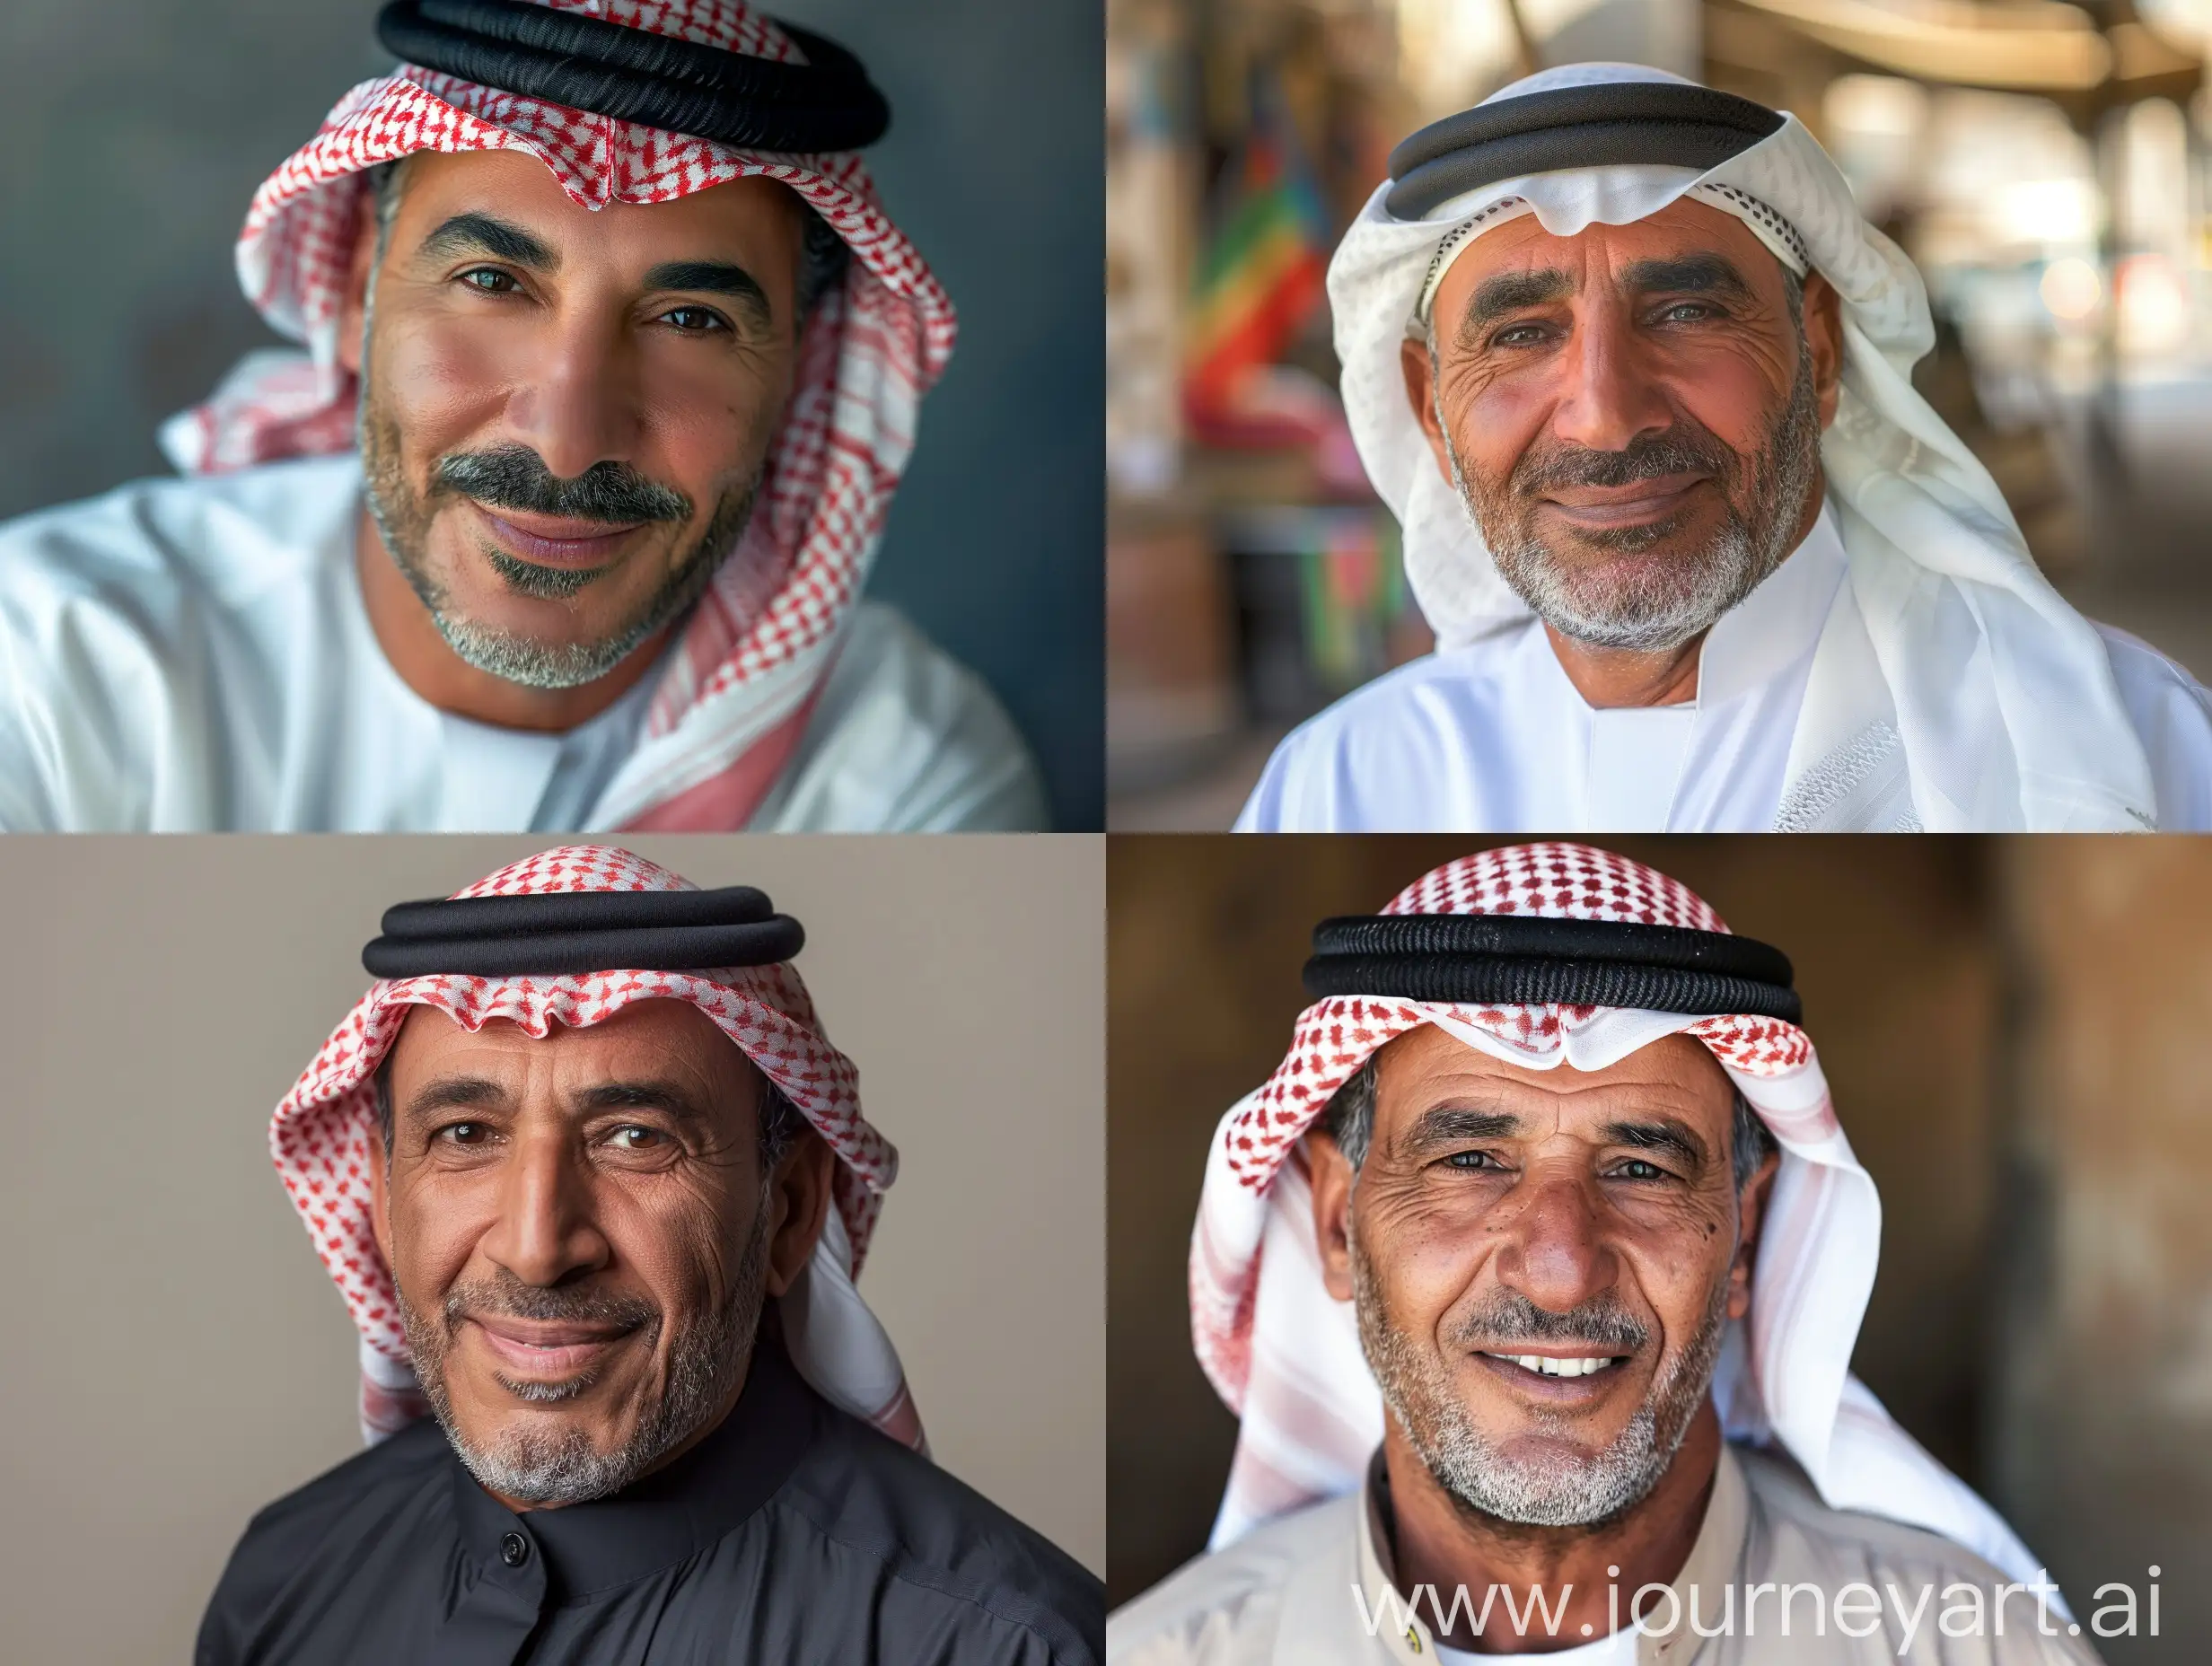 Joyful-Arab-Man-Smiling-for-Realistic-Portrait-Photography